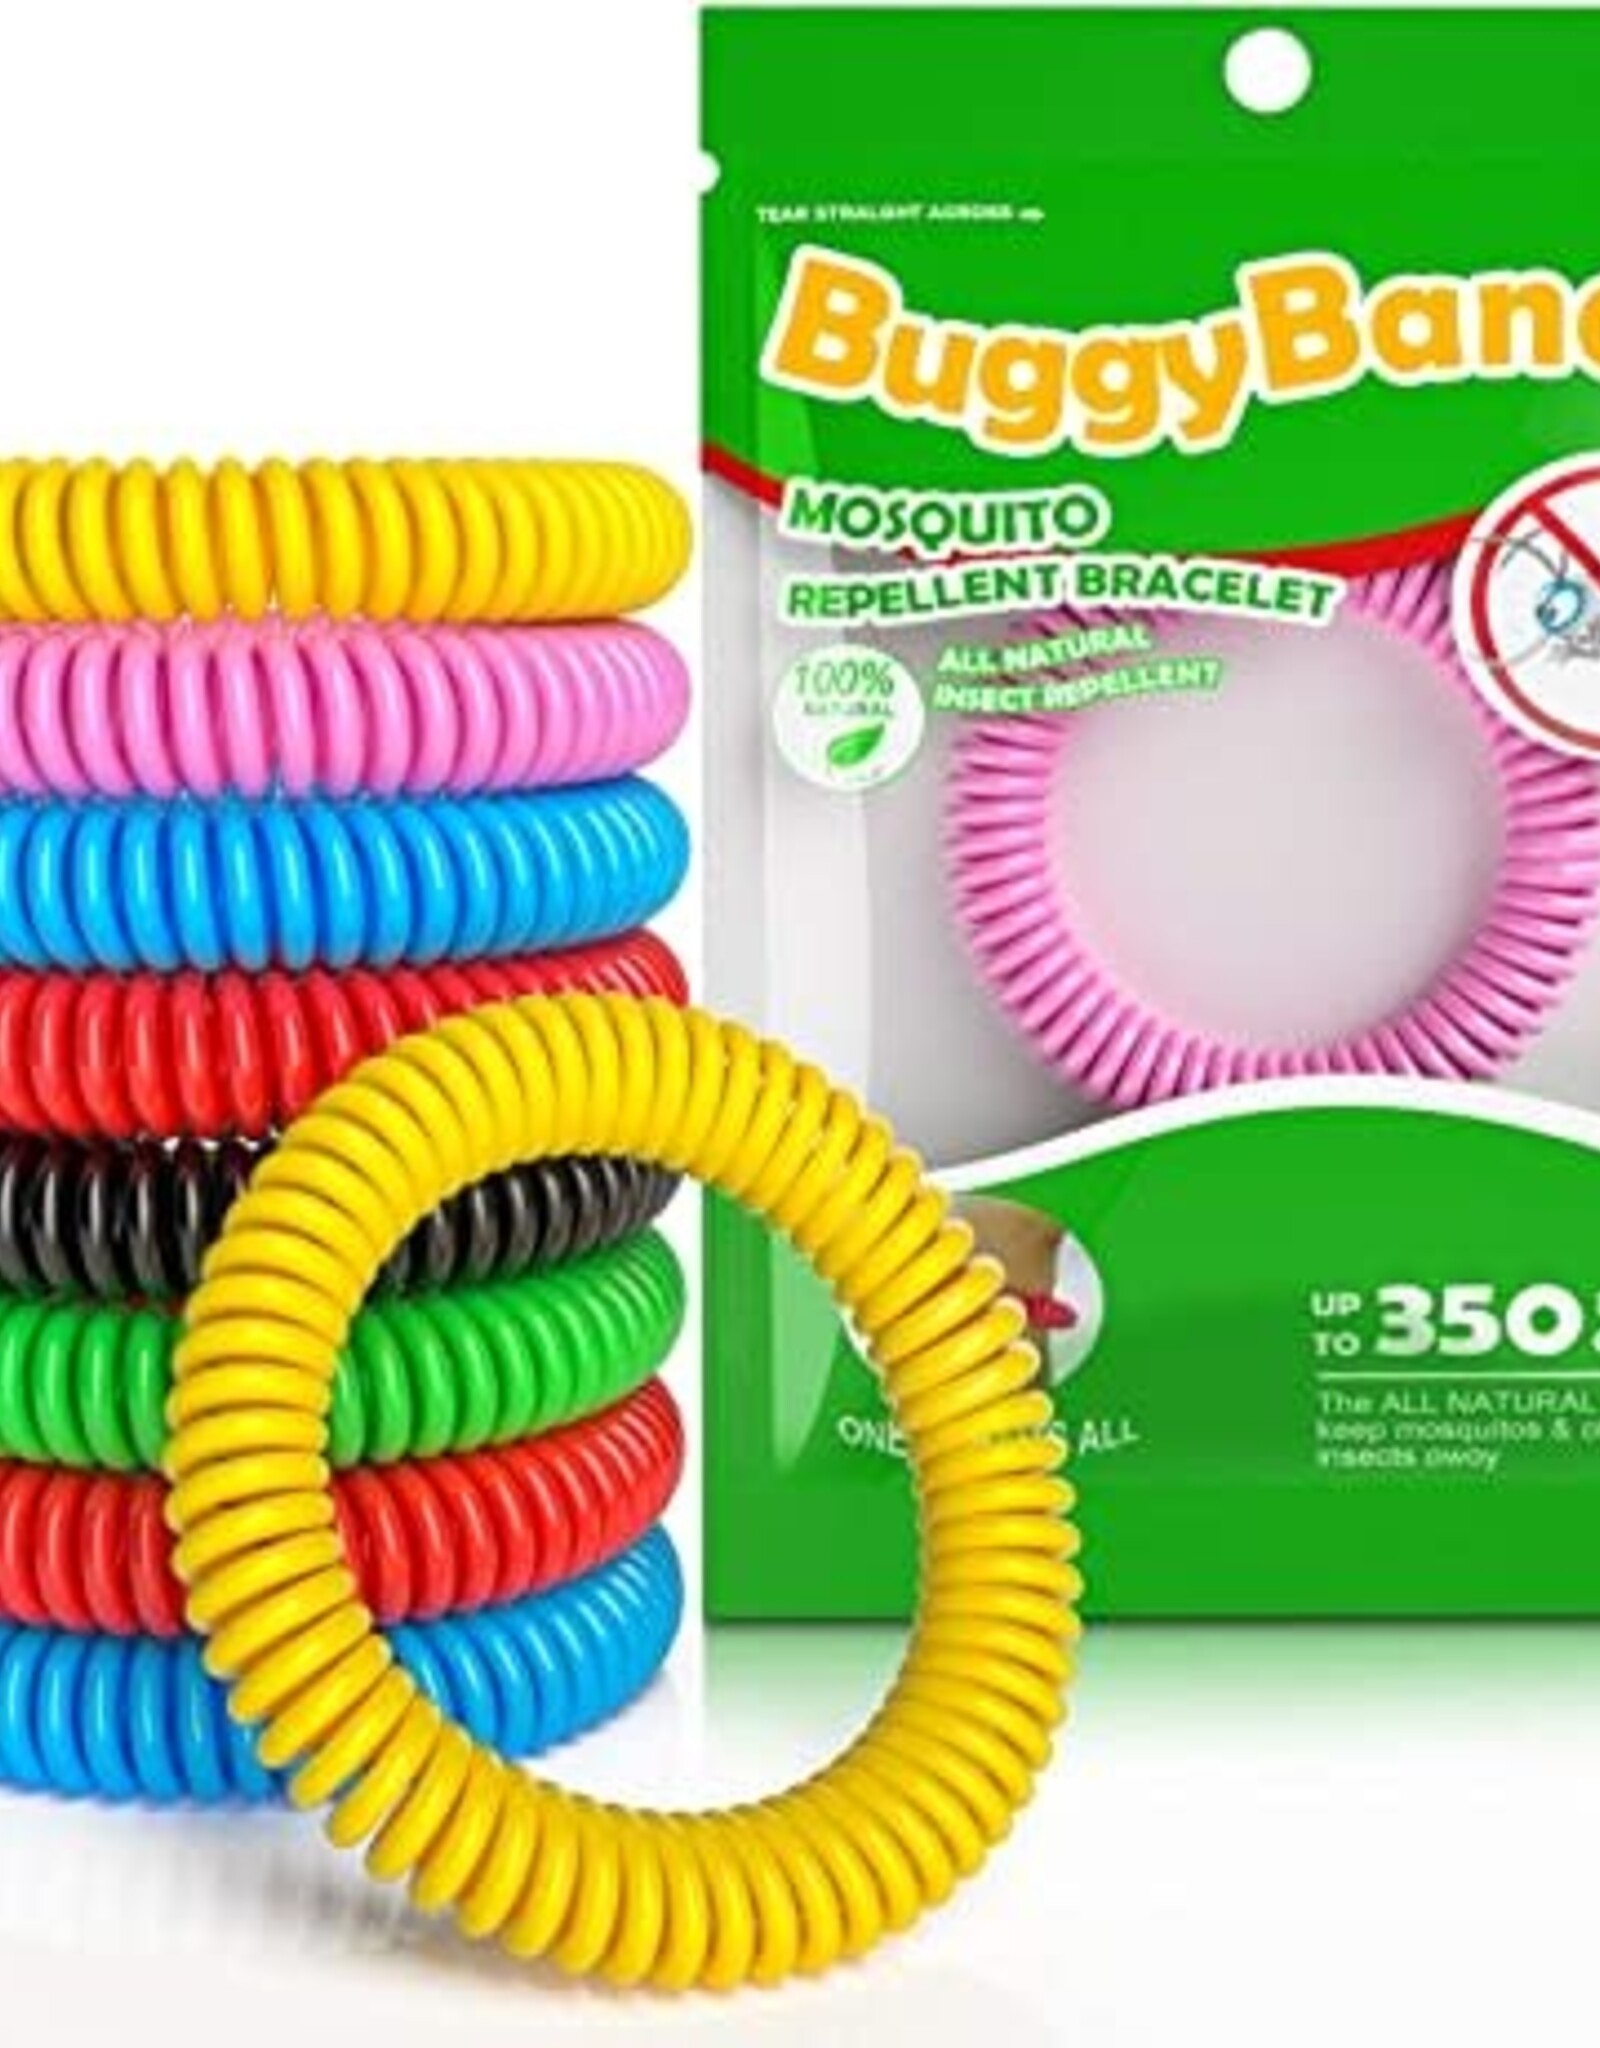 Buggy Band Mosquito Bracelets